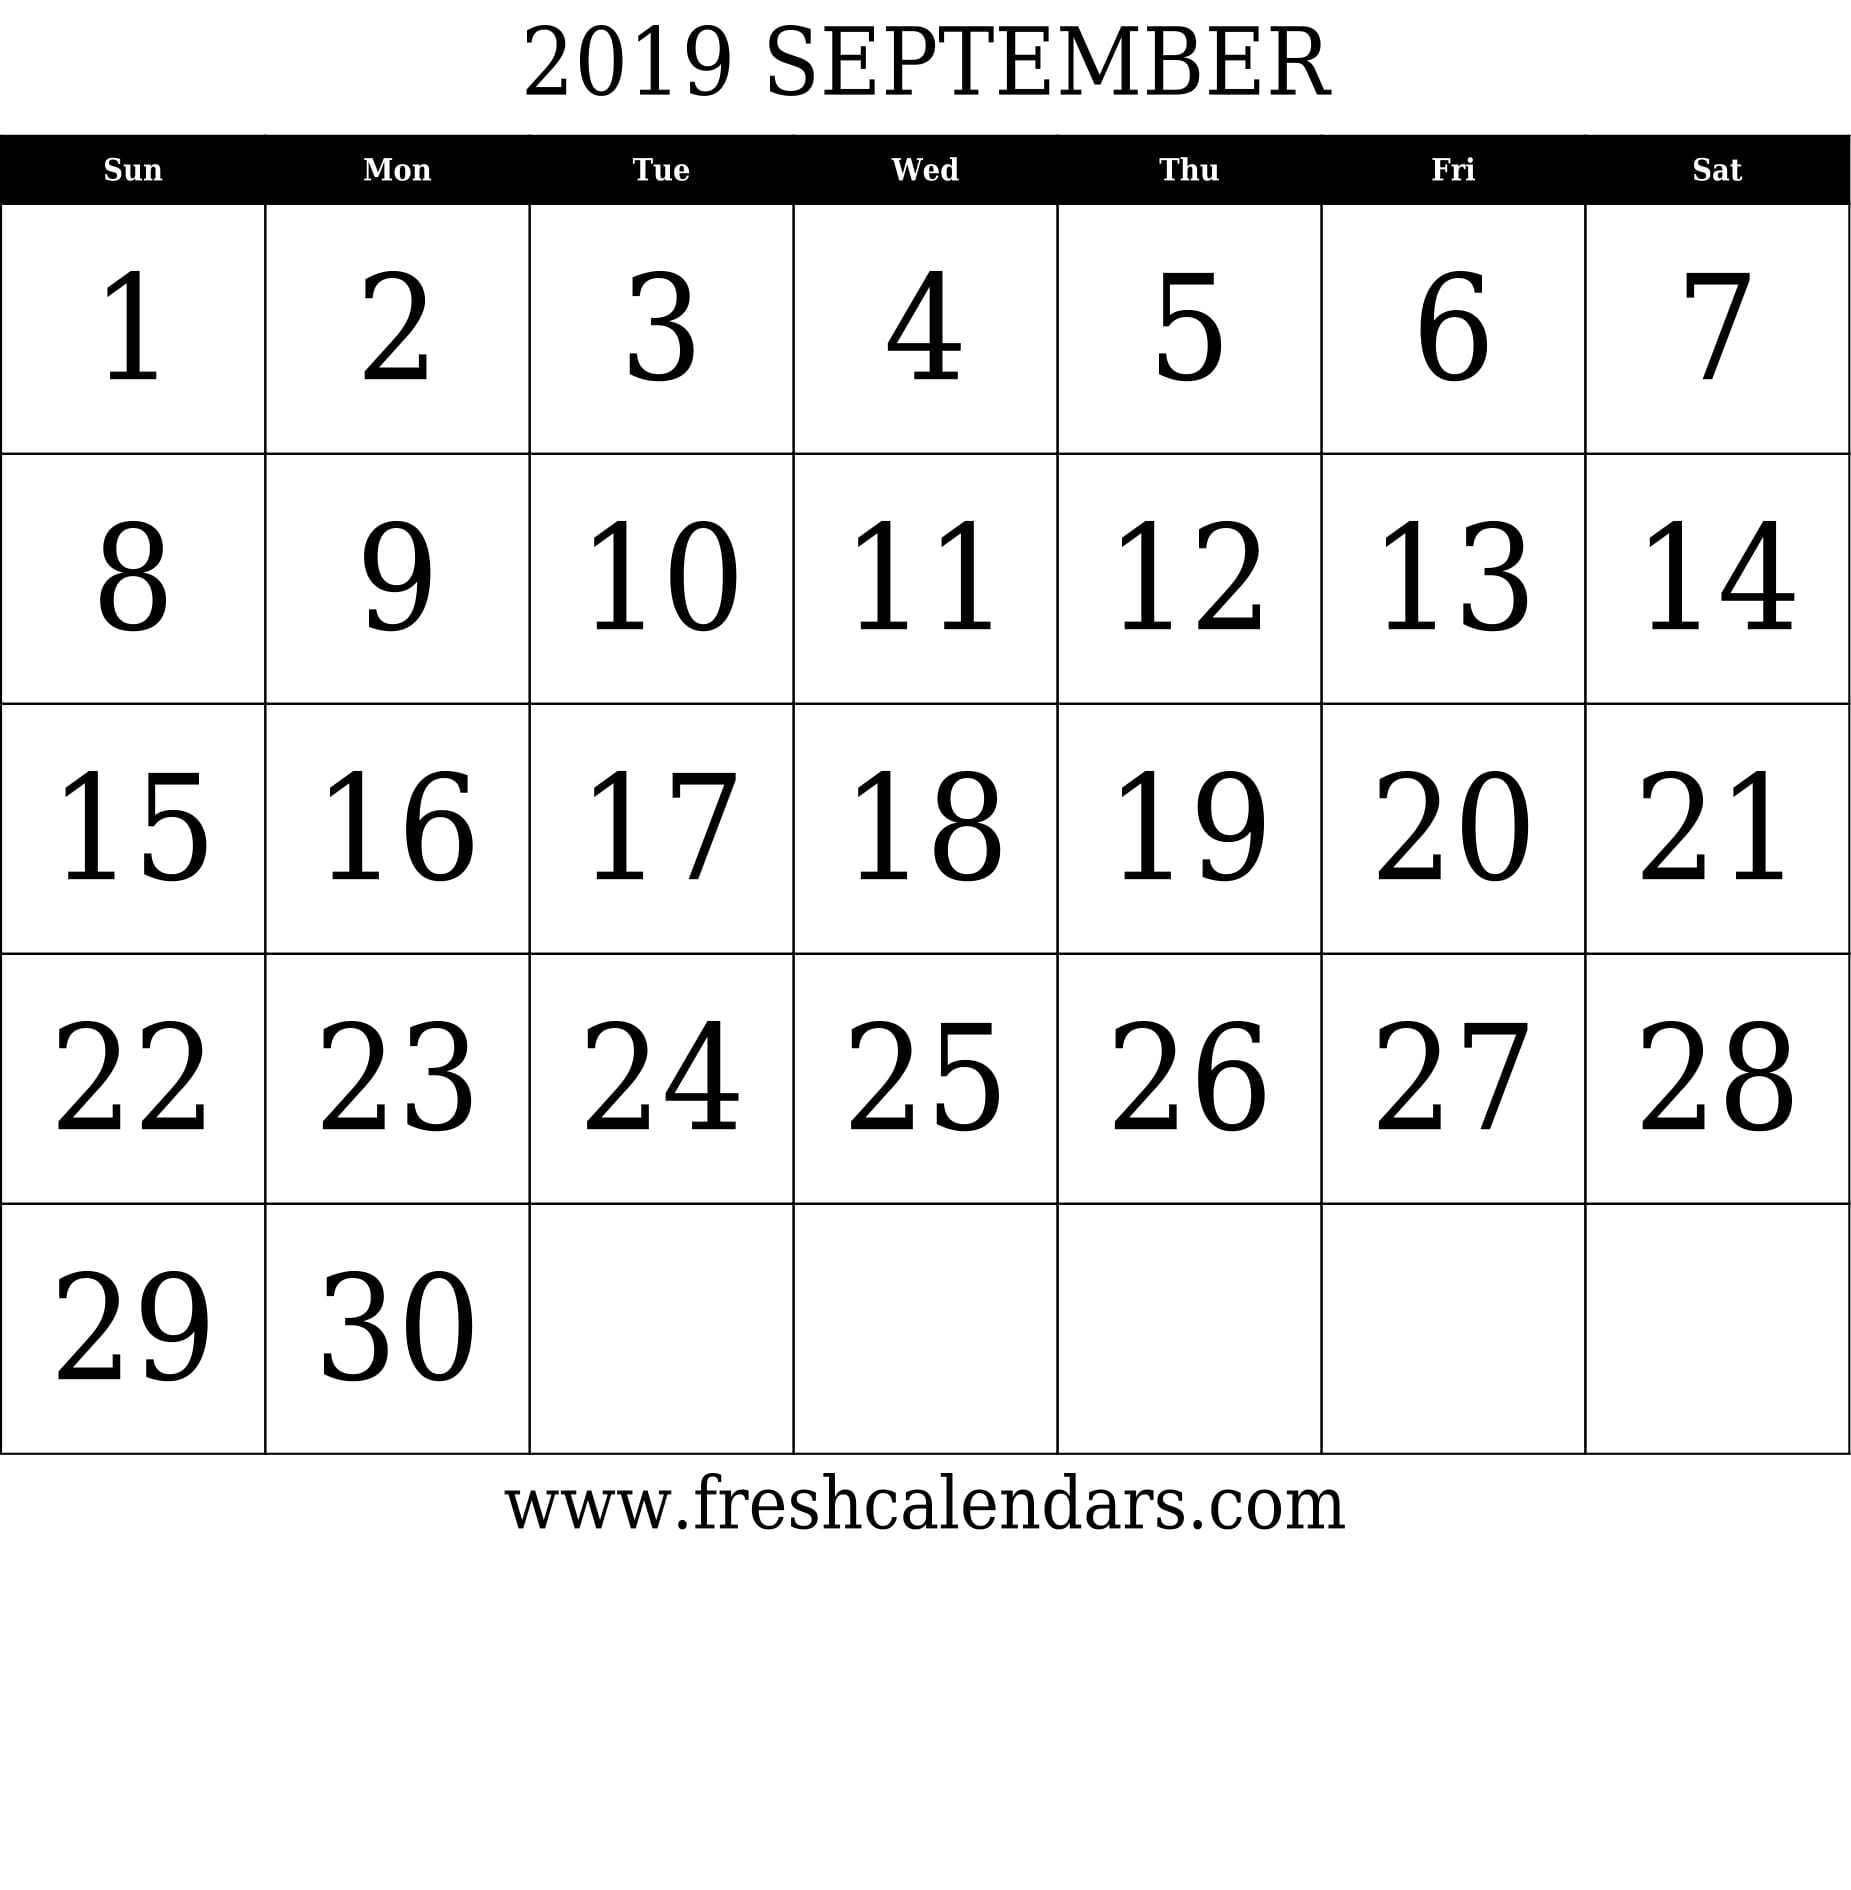 September 2019 Calendar With Large Dates